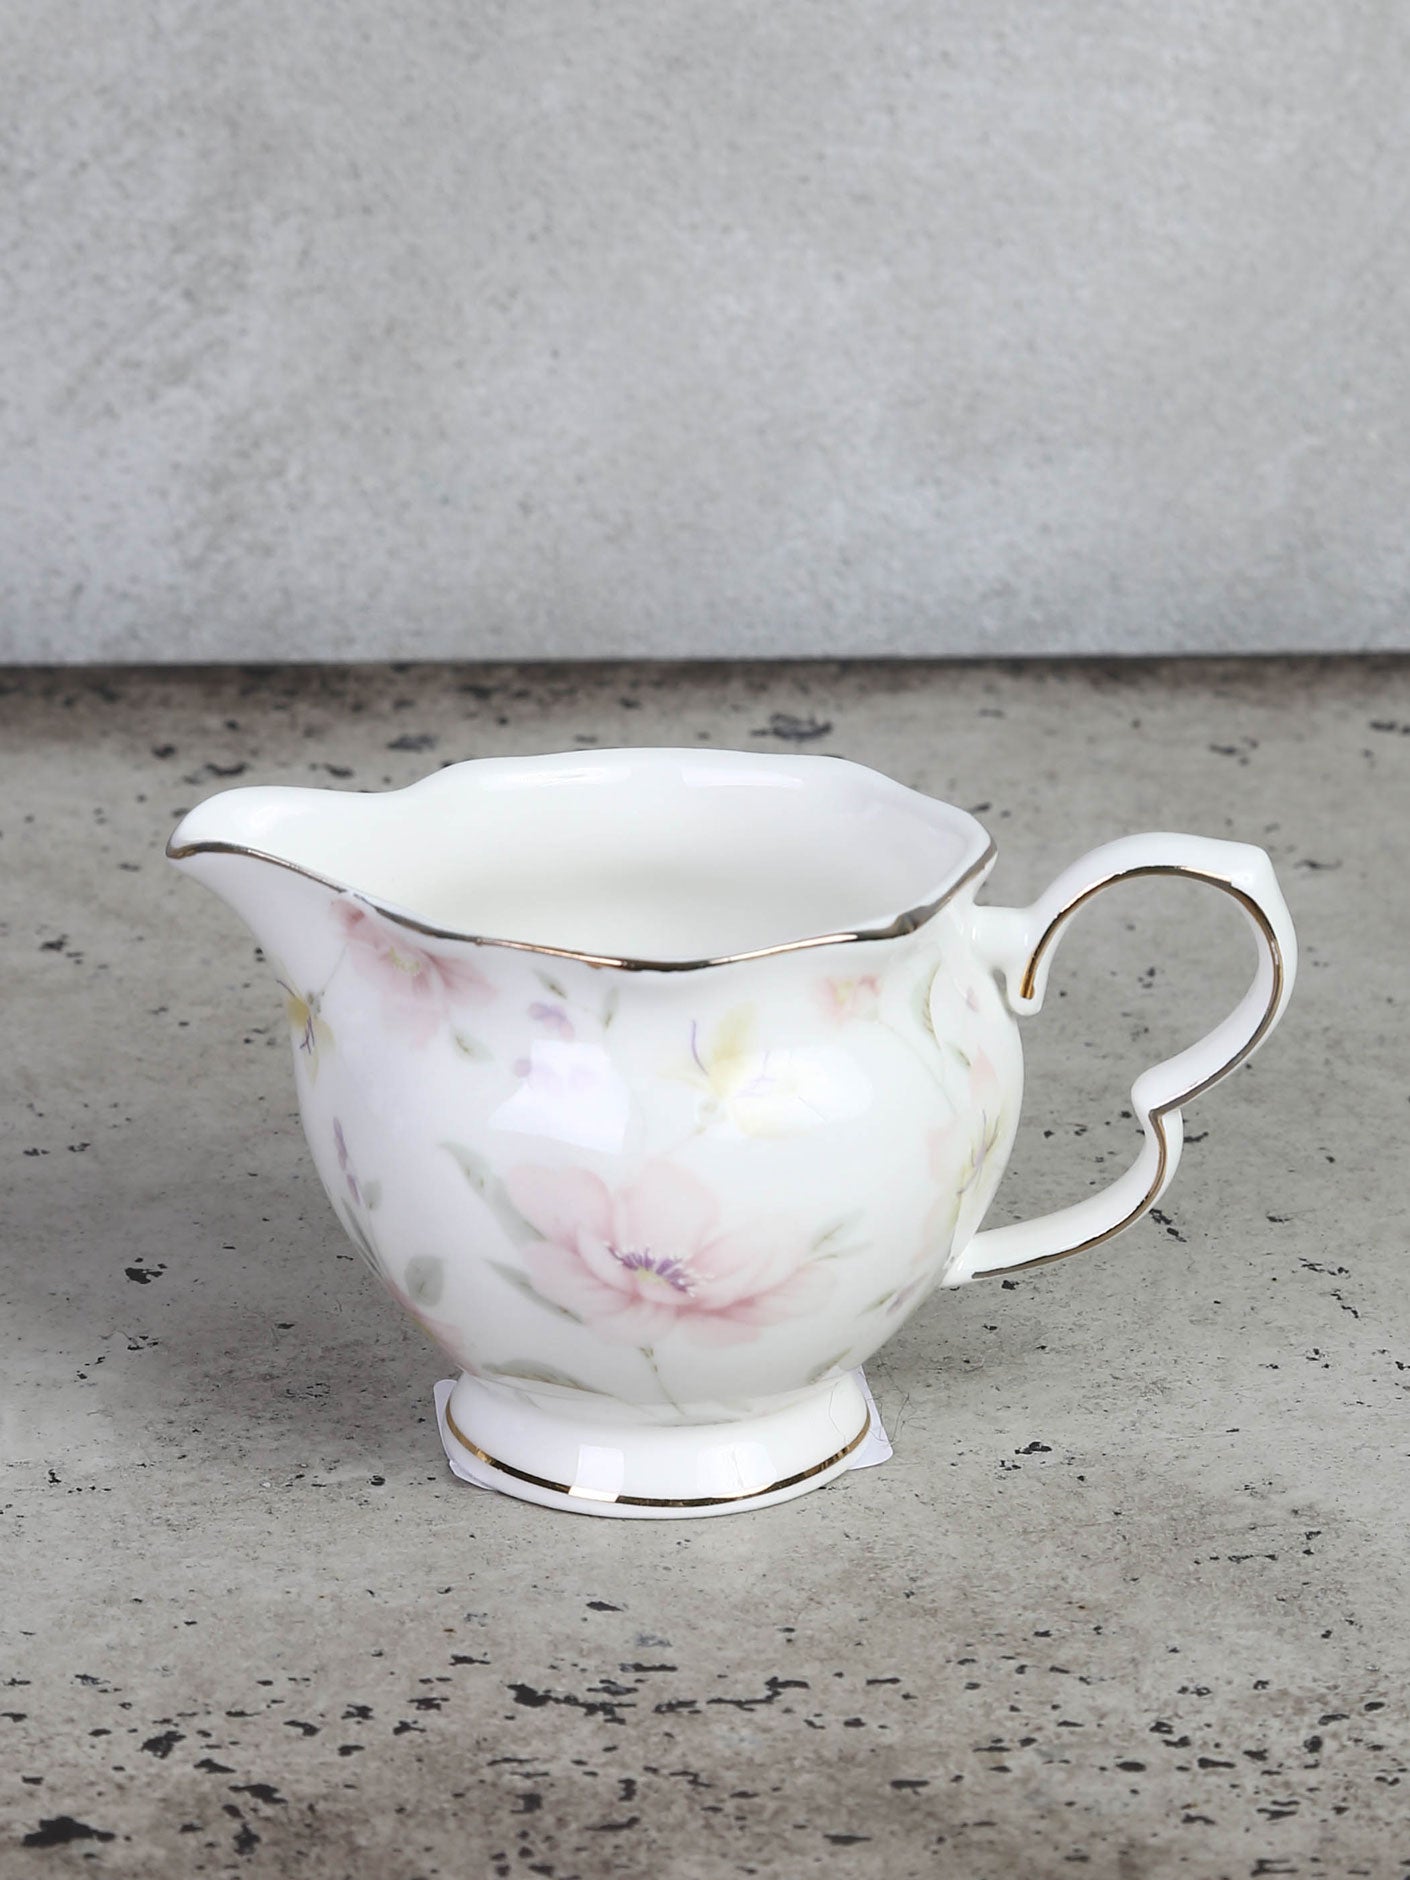 Milk jug or cream jug with floral motif and gold edge